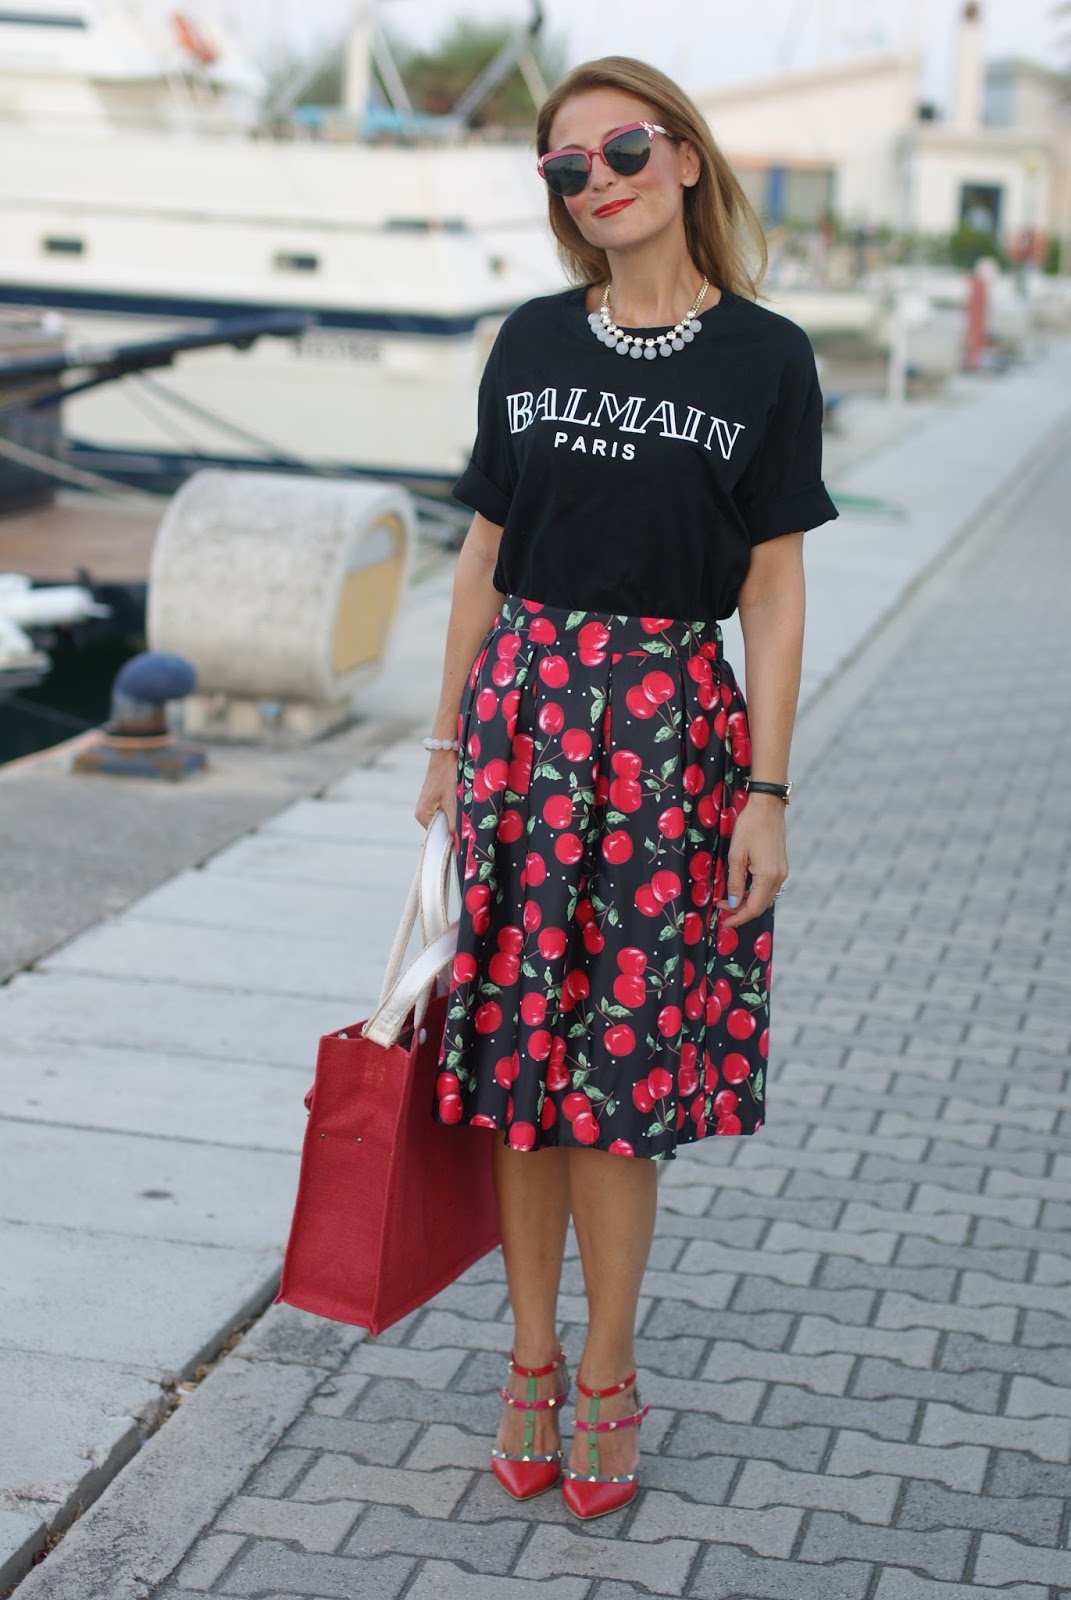 Choies cherry print skirt and Balmain t-shirt on Fashion and Cookies fashion blog